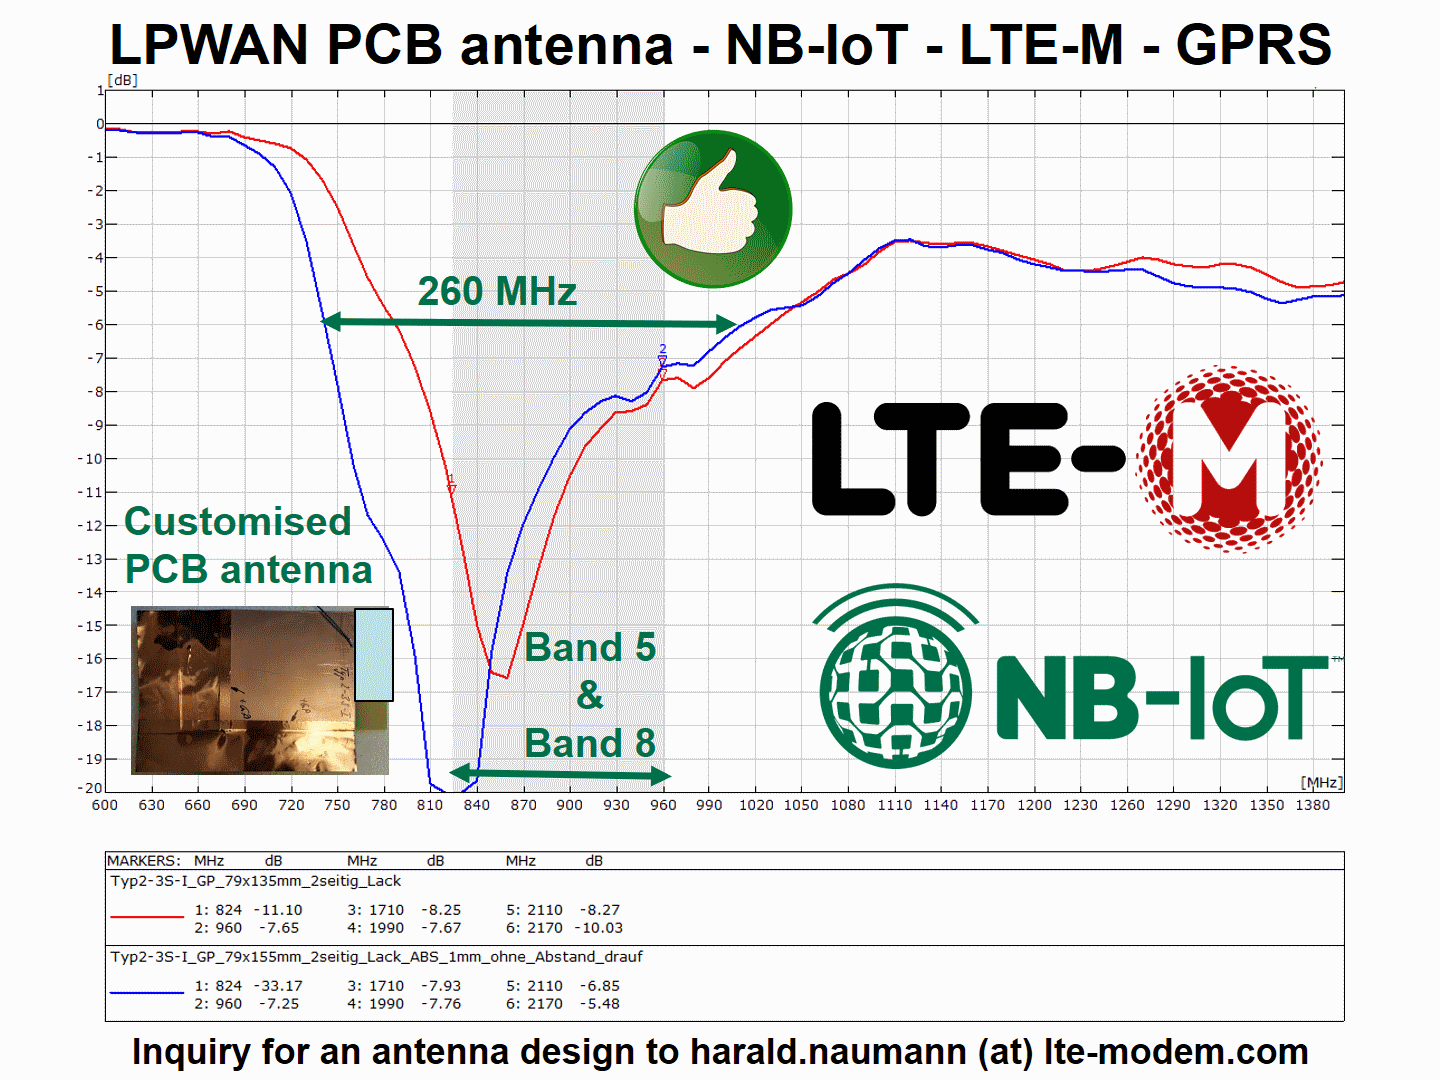 NB-IoT antenna - customised